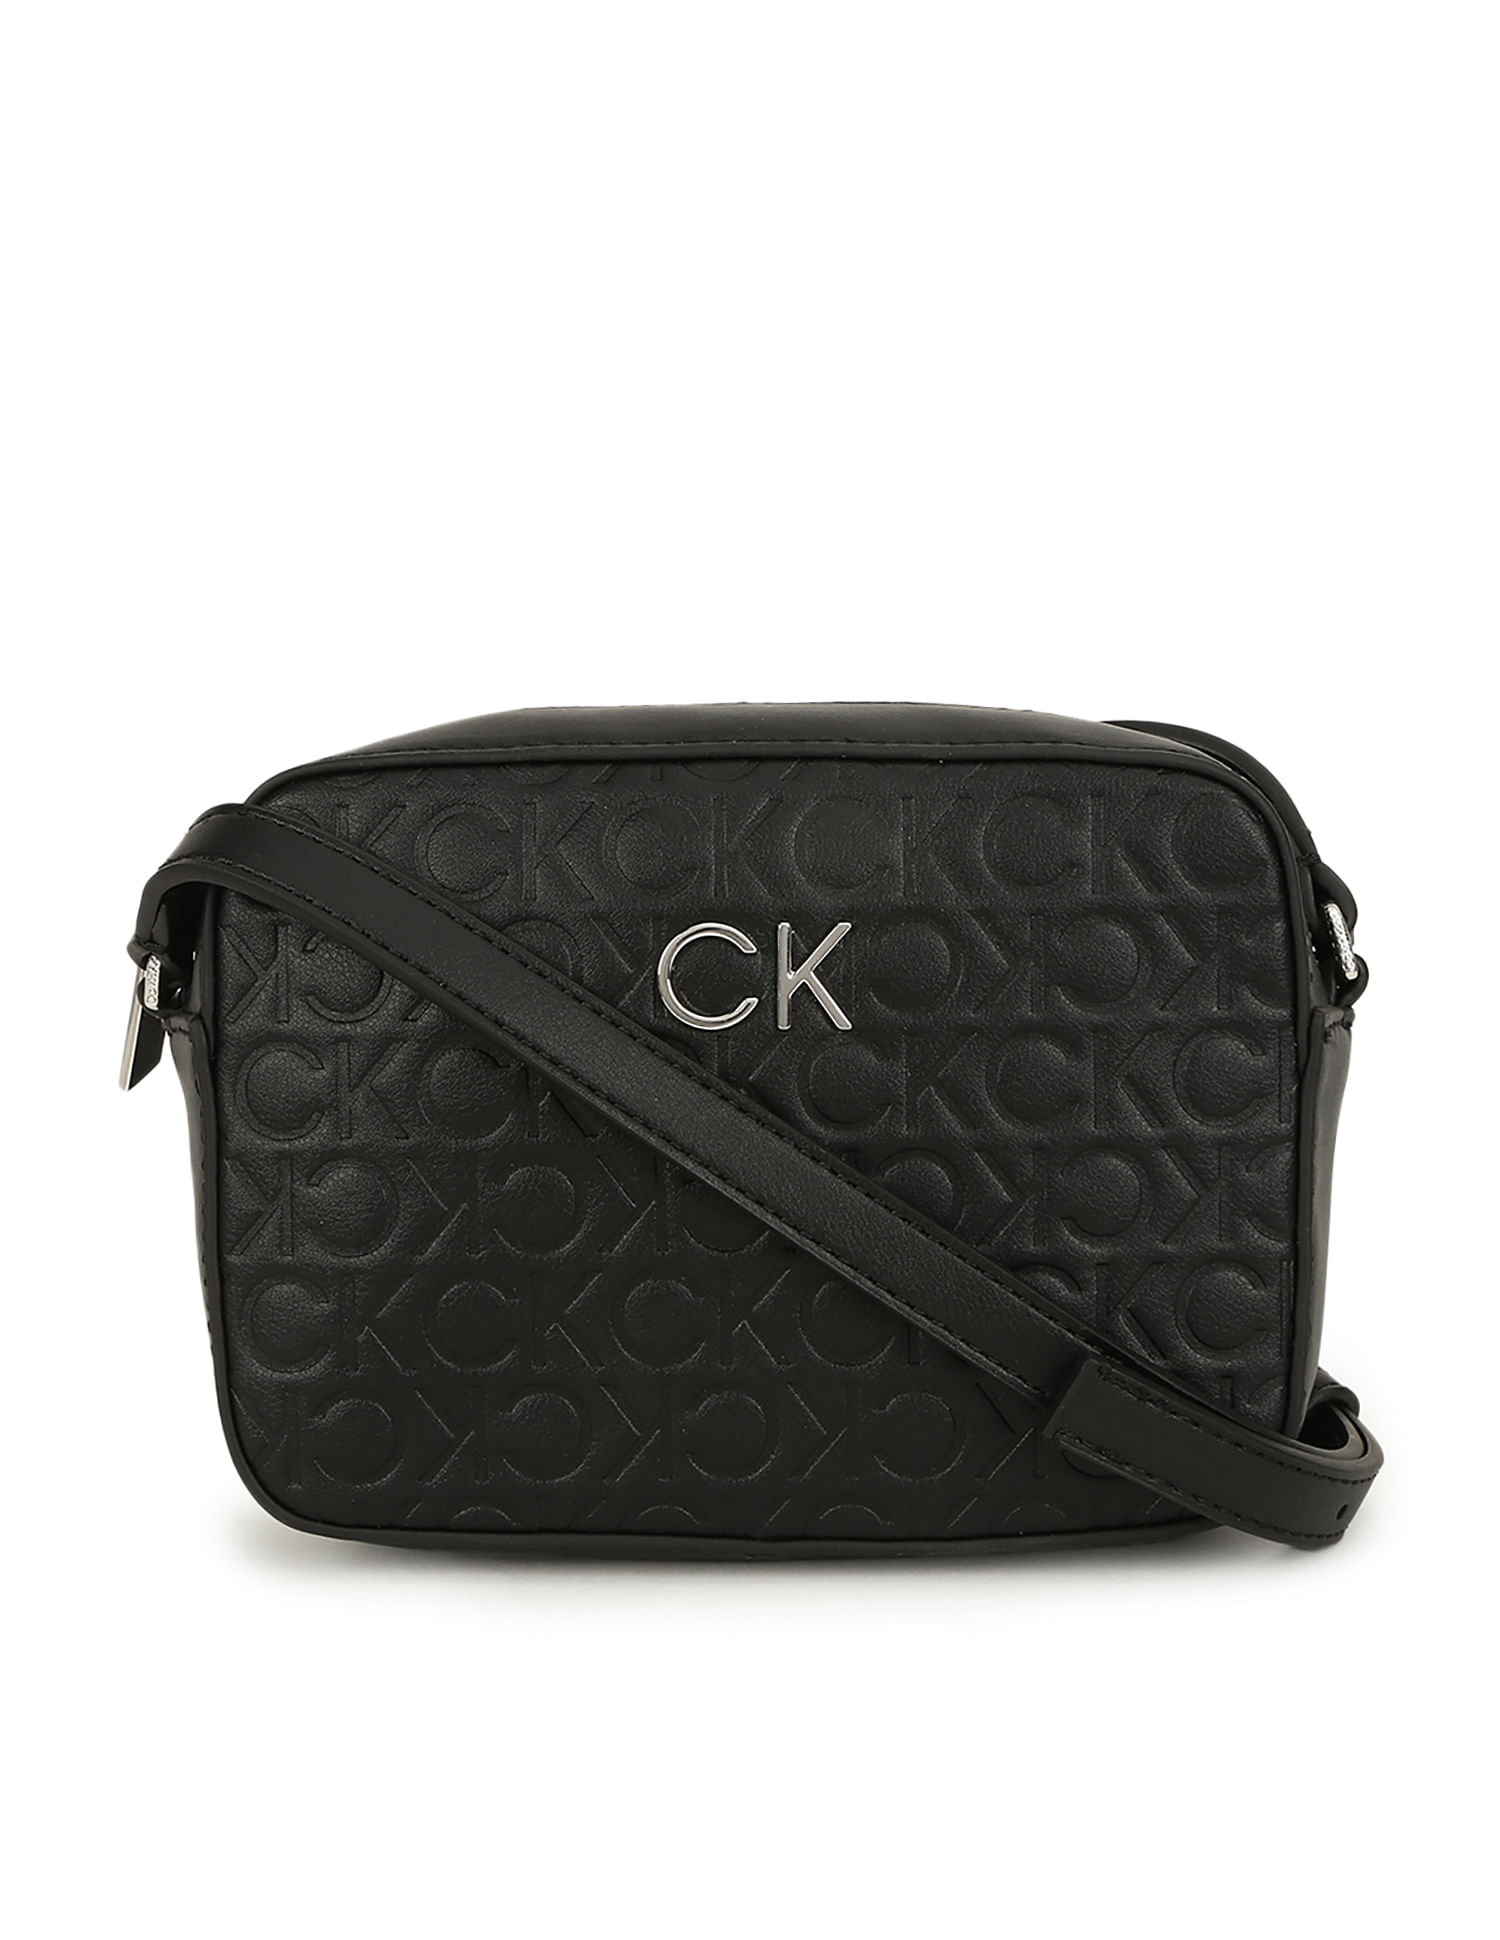 Buy Calvin Klein Sculpted Monogram Camera Bag - NNNOW.com